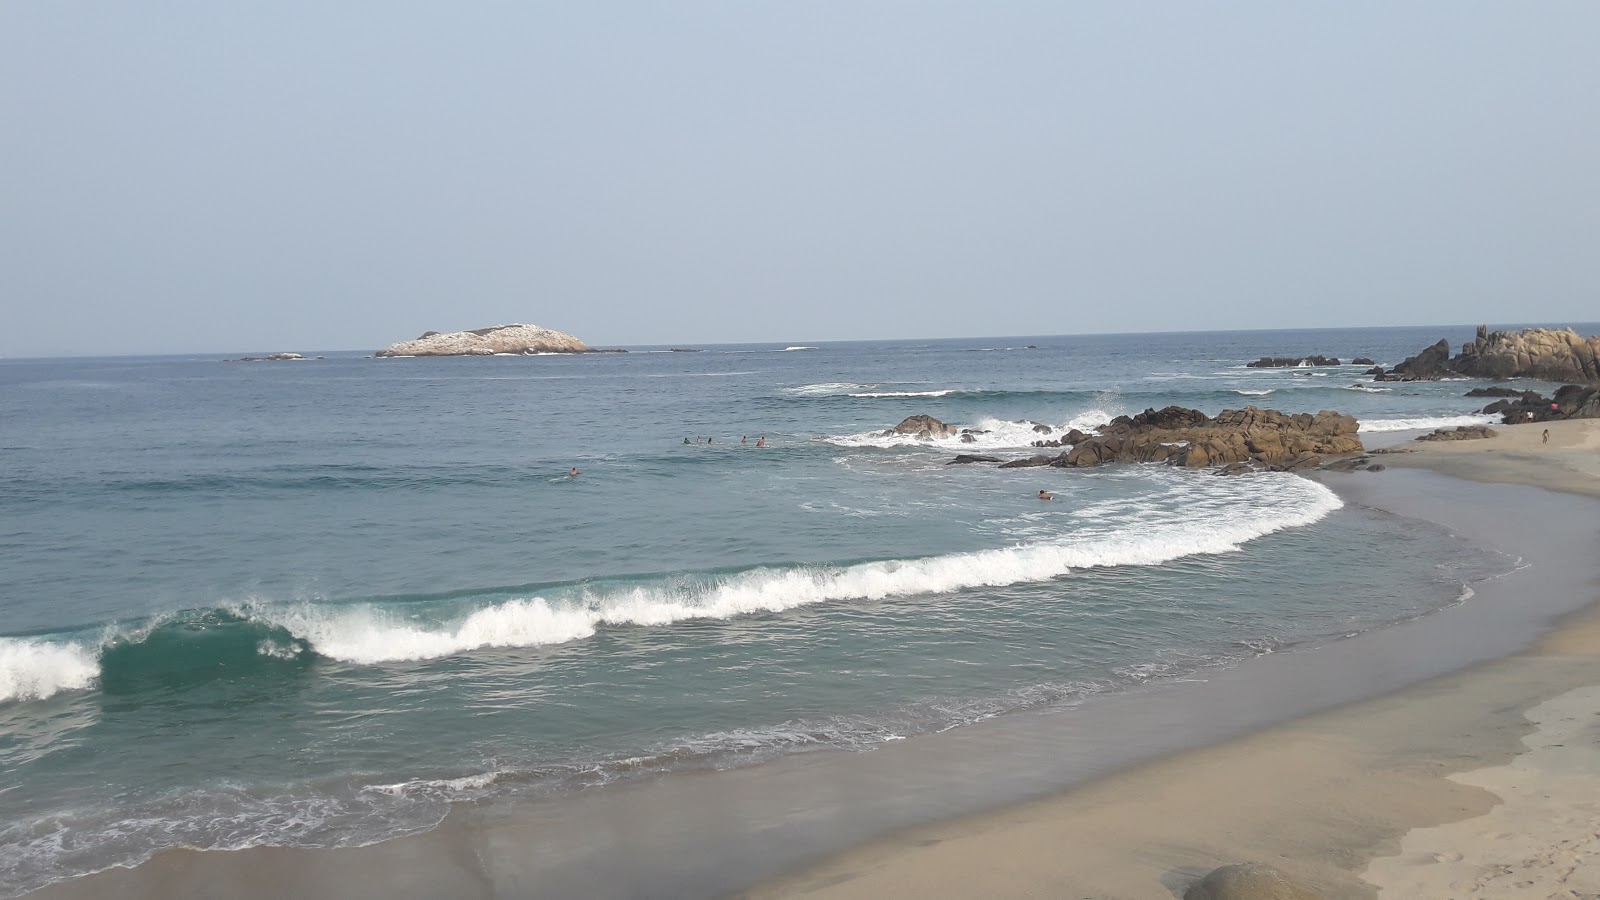 Foto de Playa del sur com praia espaçosa